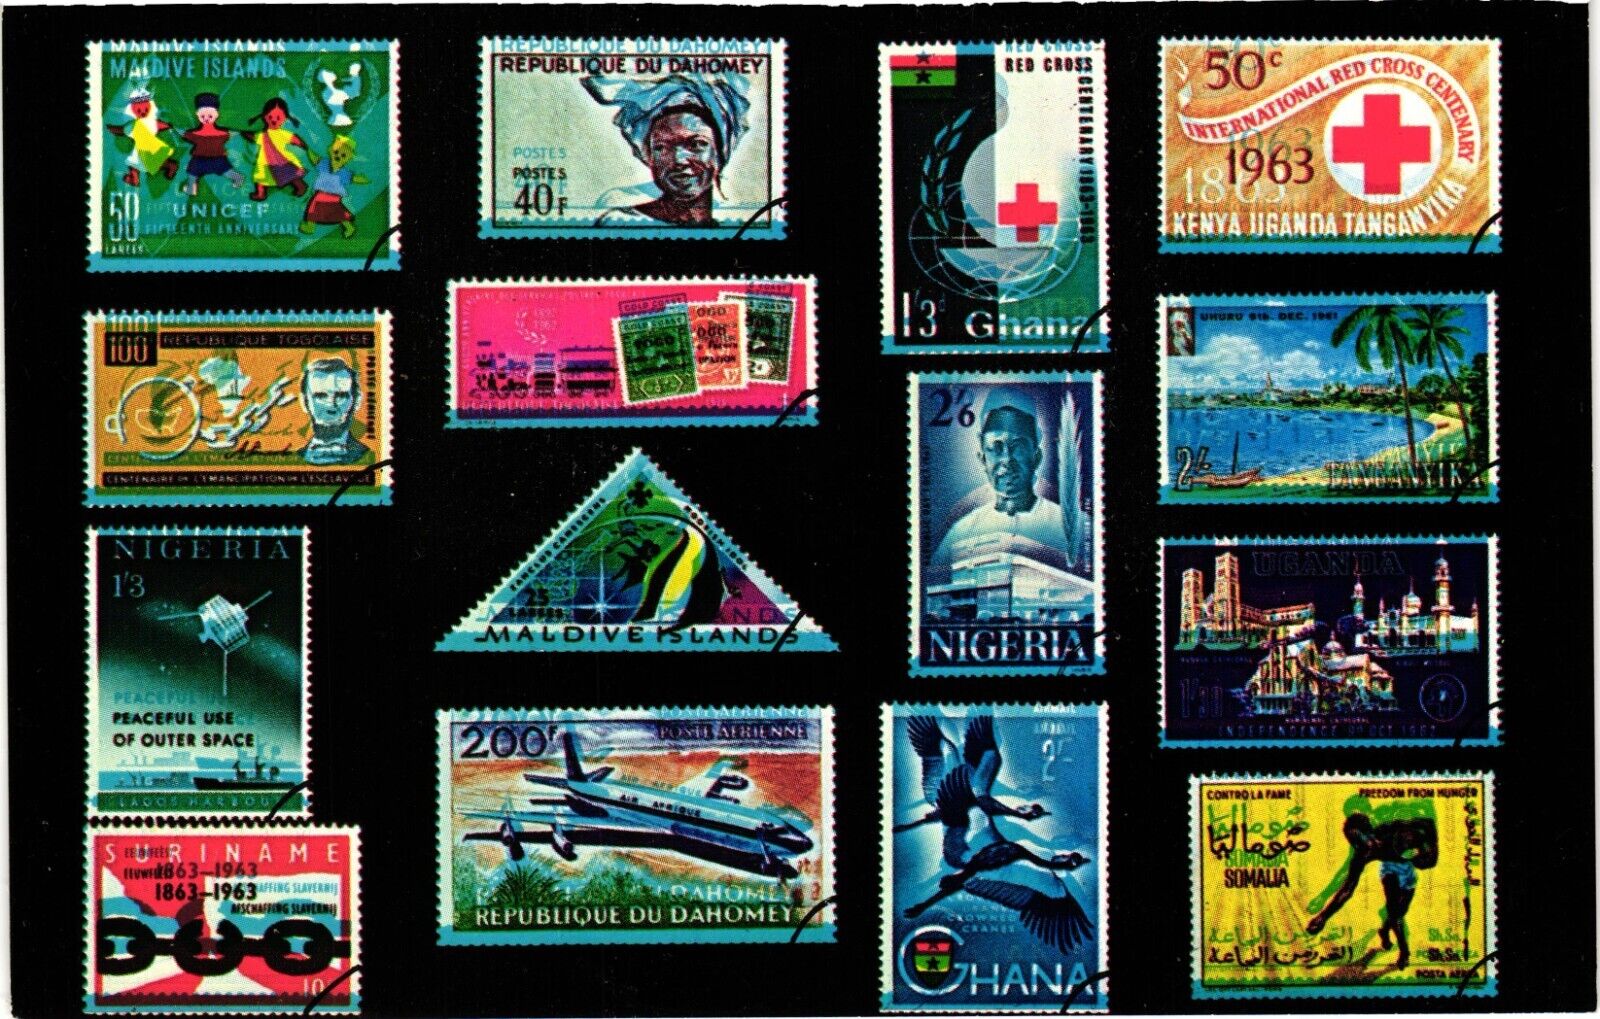 Greetings from My Favorite Stamp Show 1963 Postcard Unused